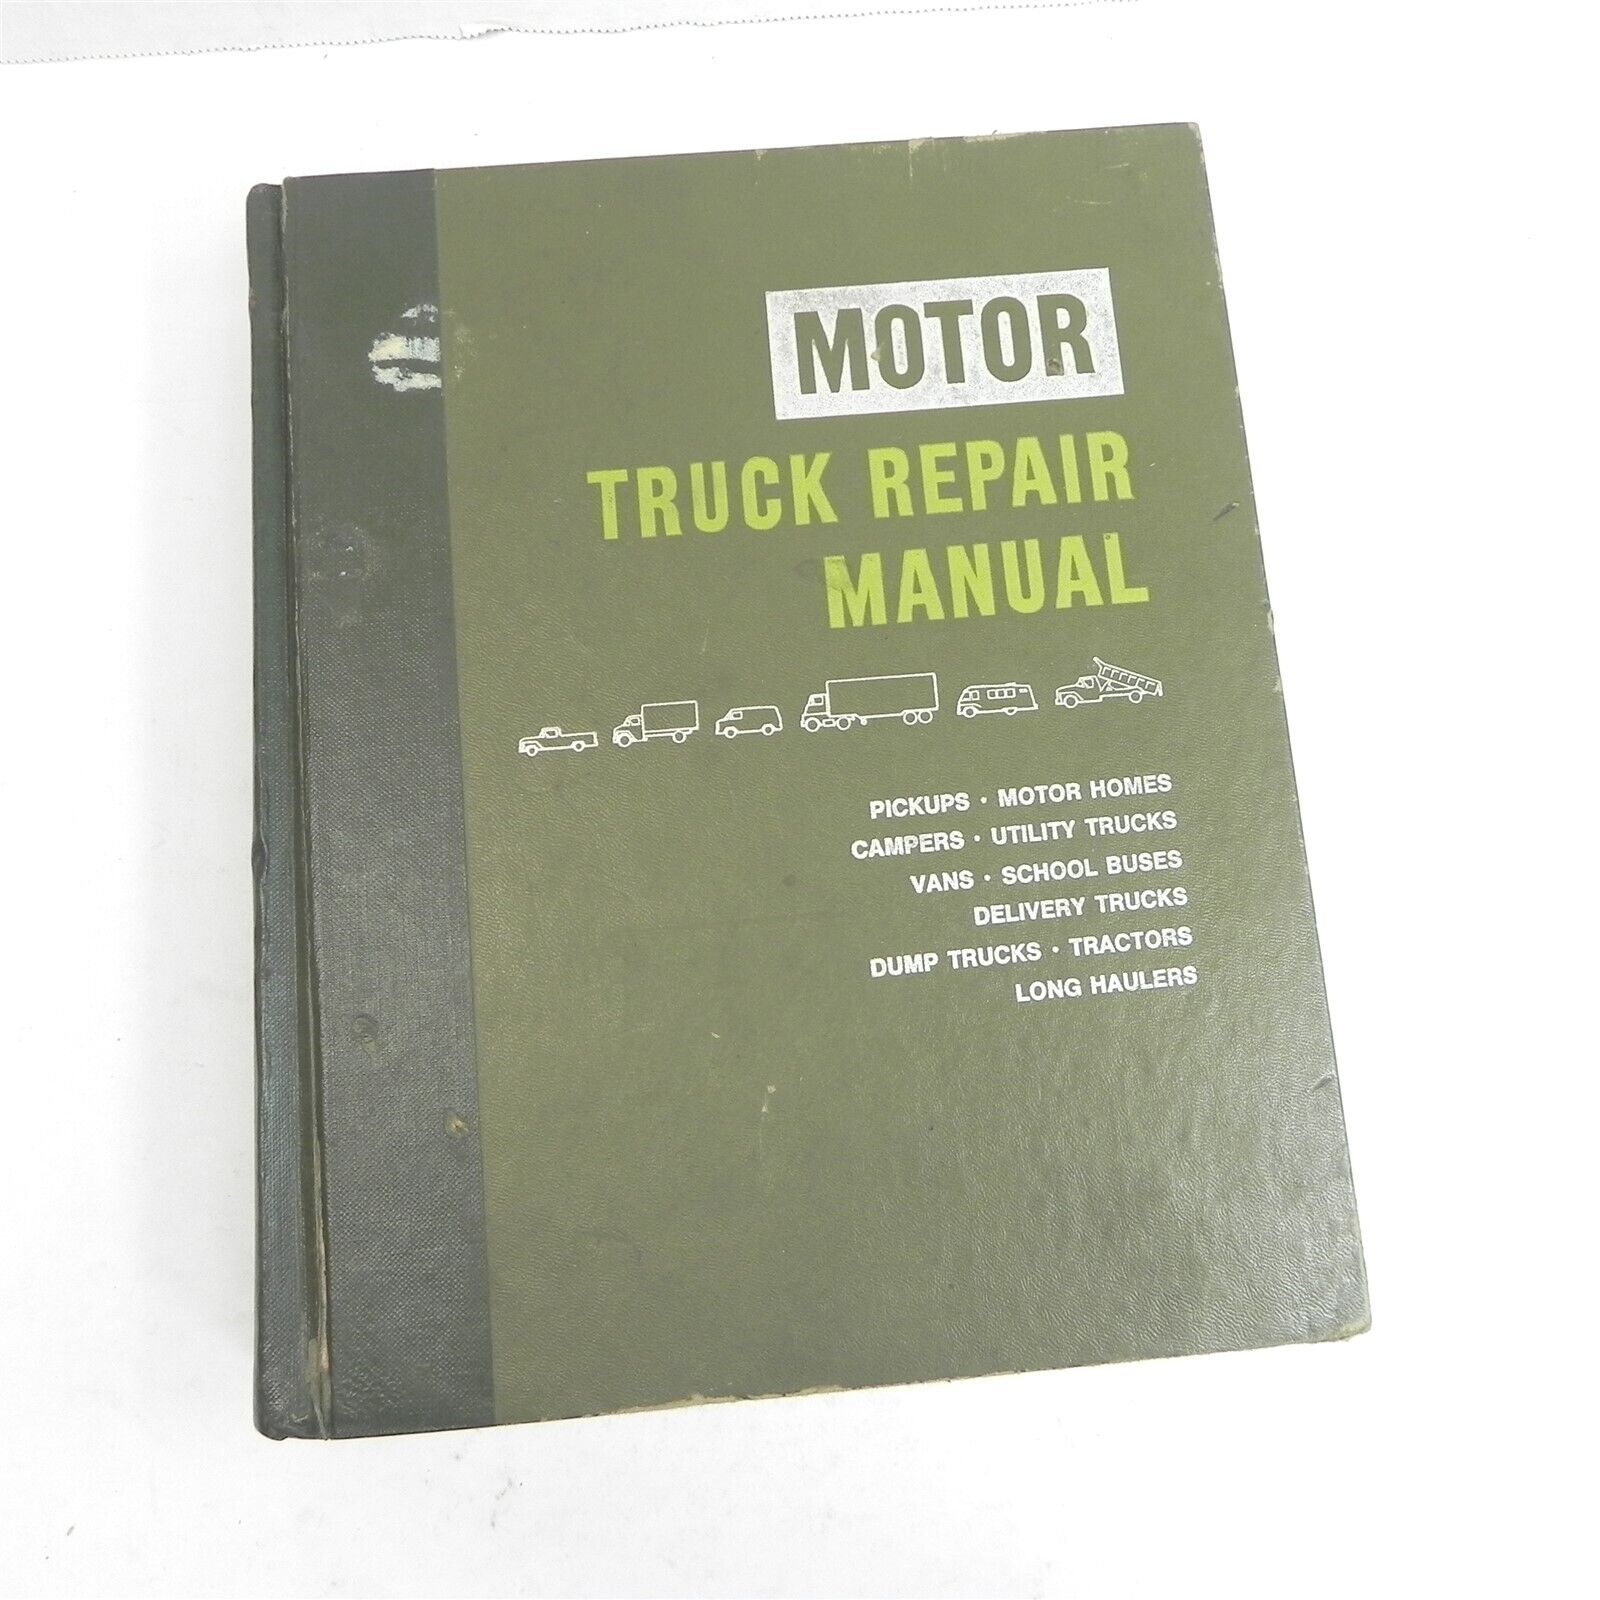 VINTAGE 1975 28TH EDITION MOTOR TRUCK AND DIESEL REPAIR MANUAL GUIDE BOOK 